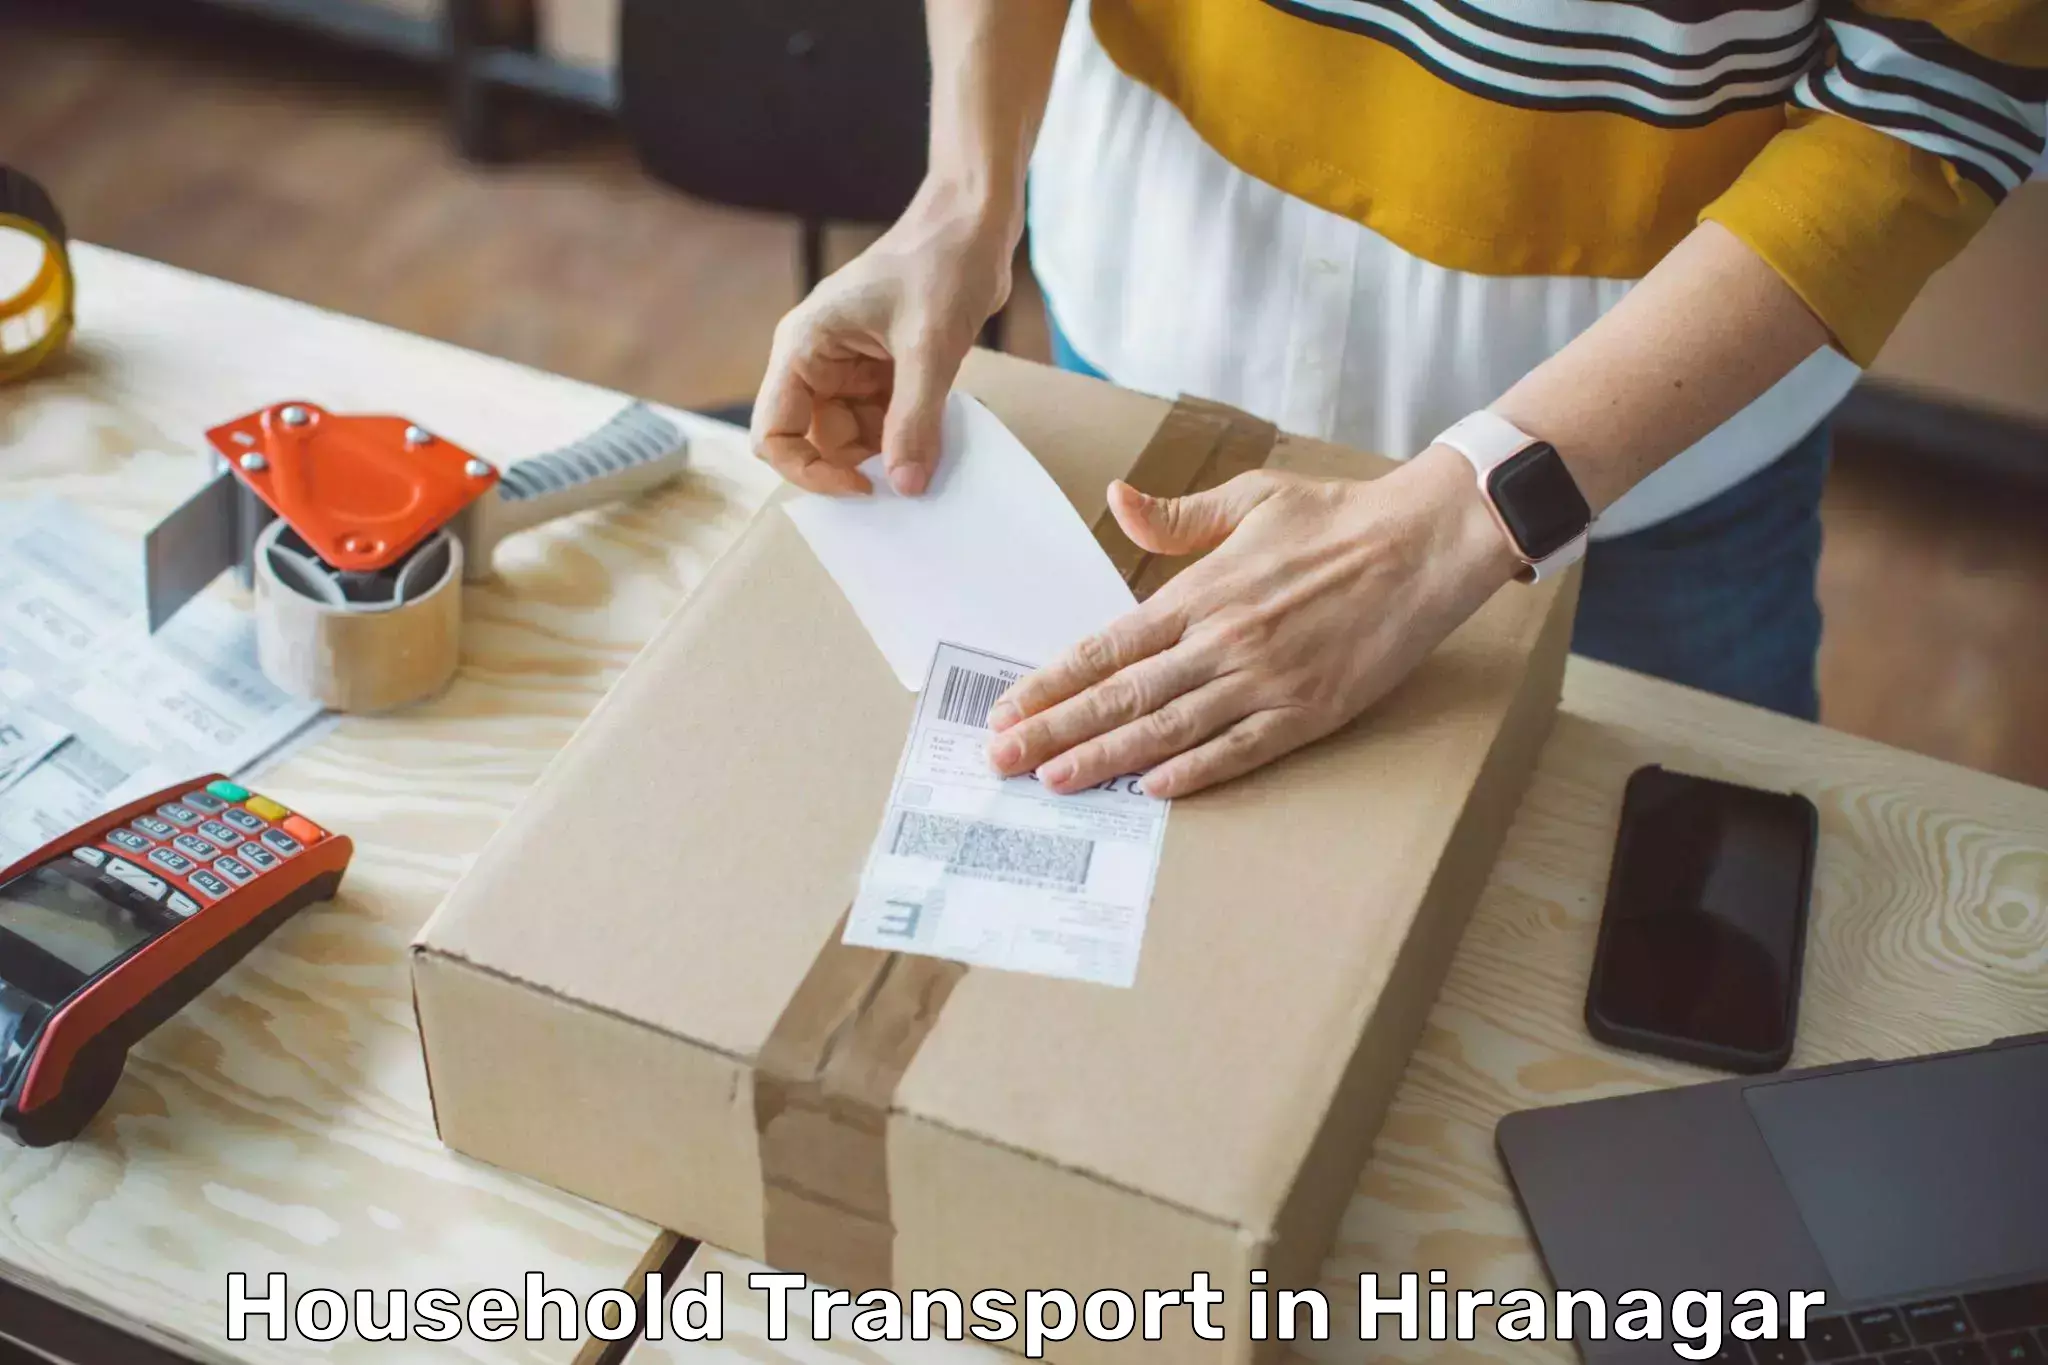 Household goods transport service in Hiranagar